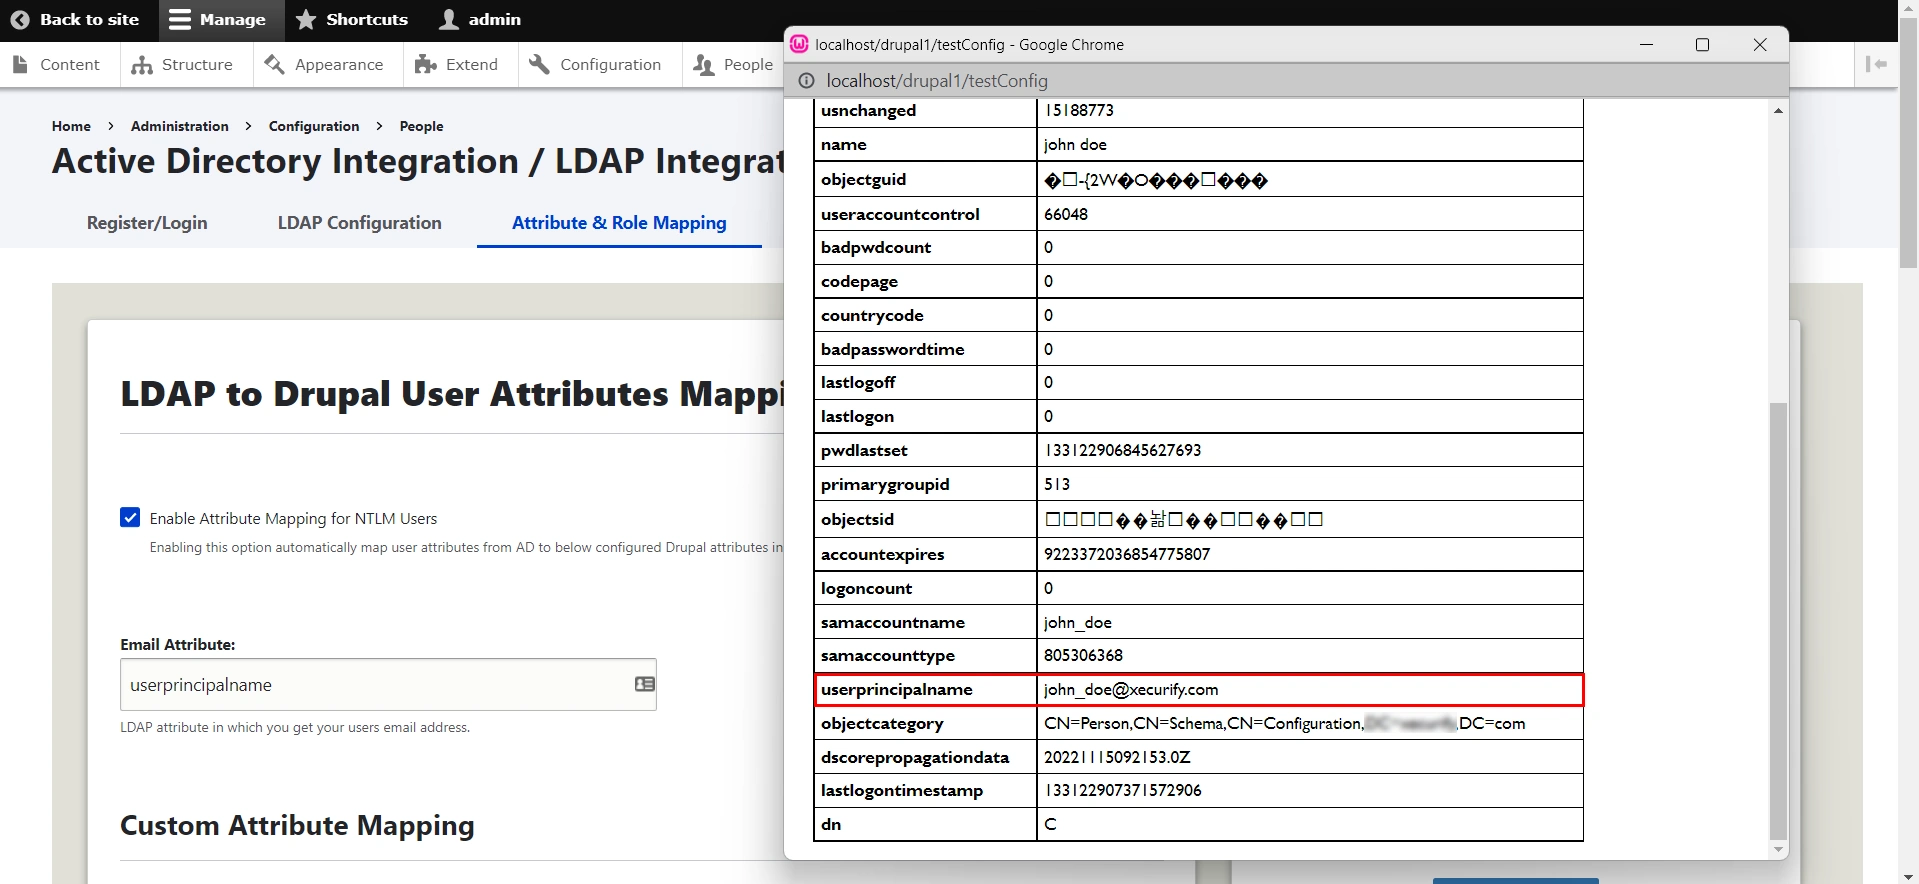 miniorange icon active directory integration LDAP integration